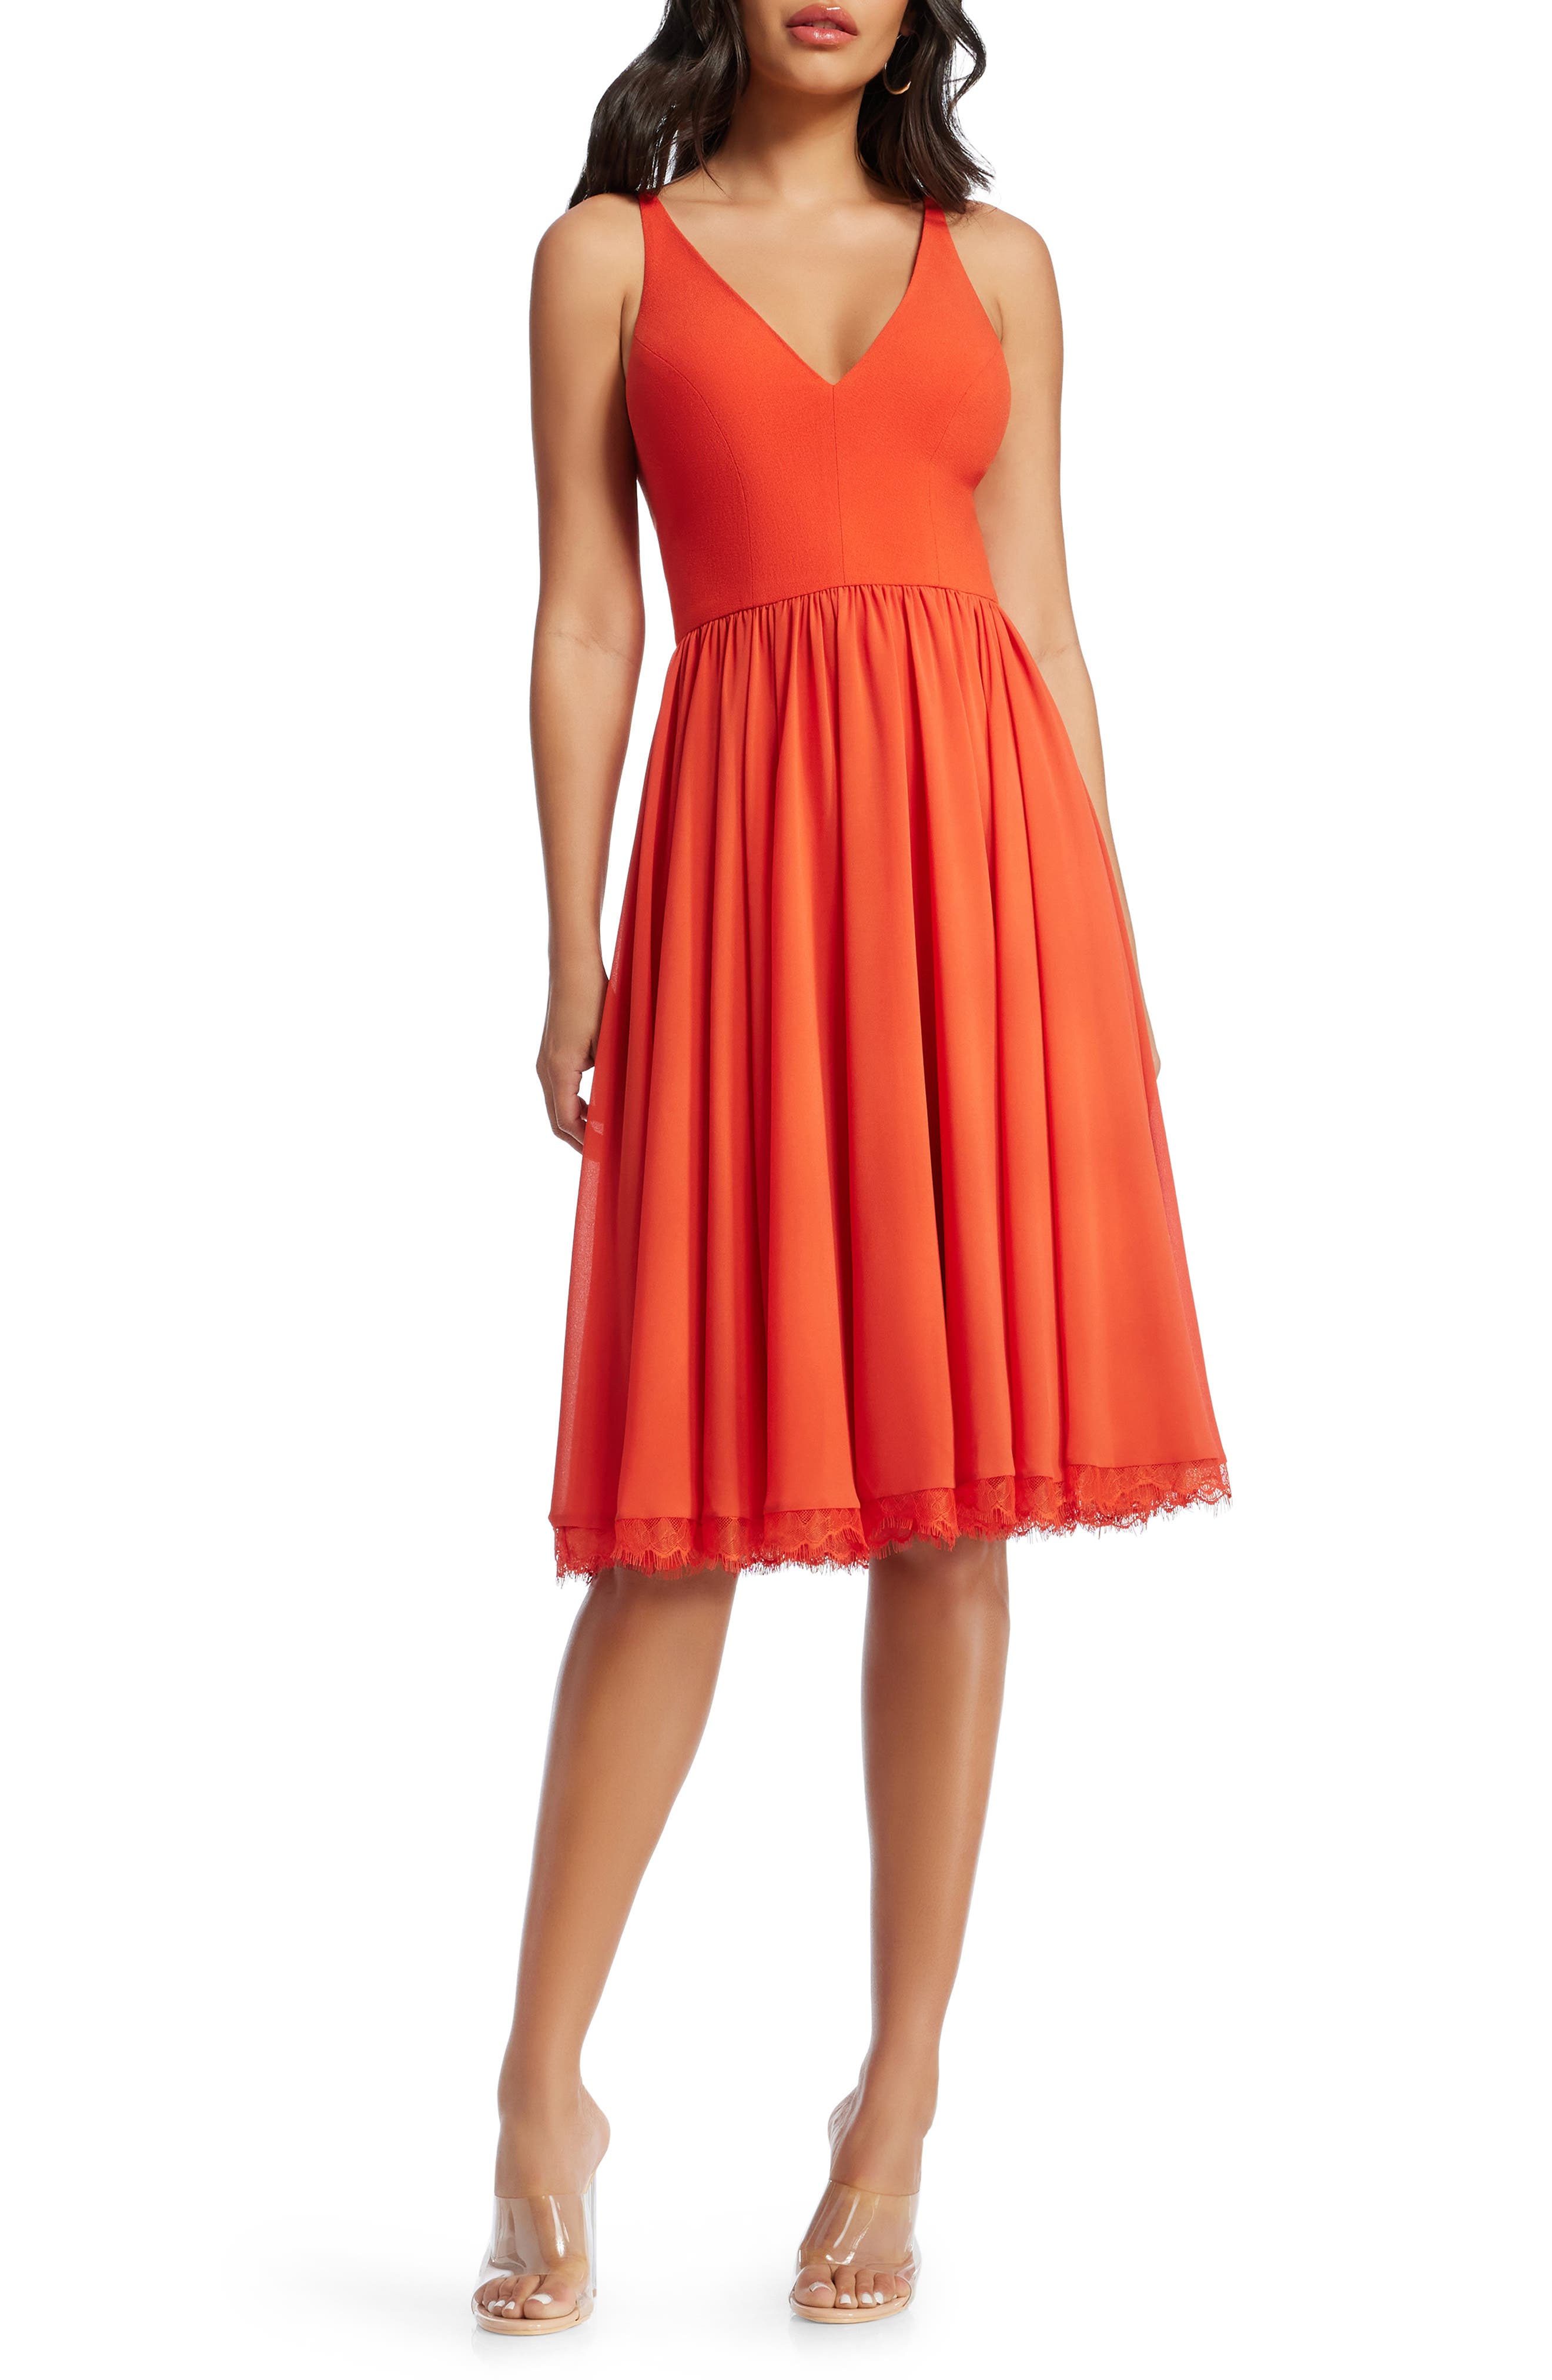 orange cocktail dress